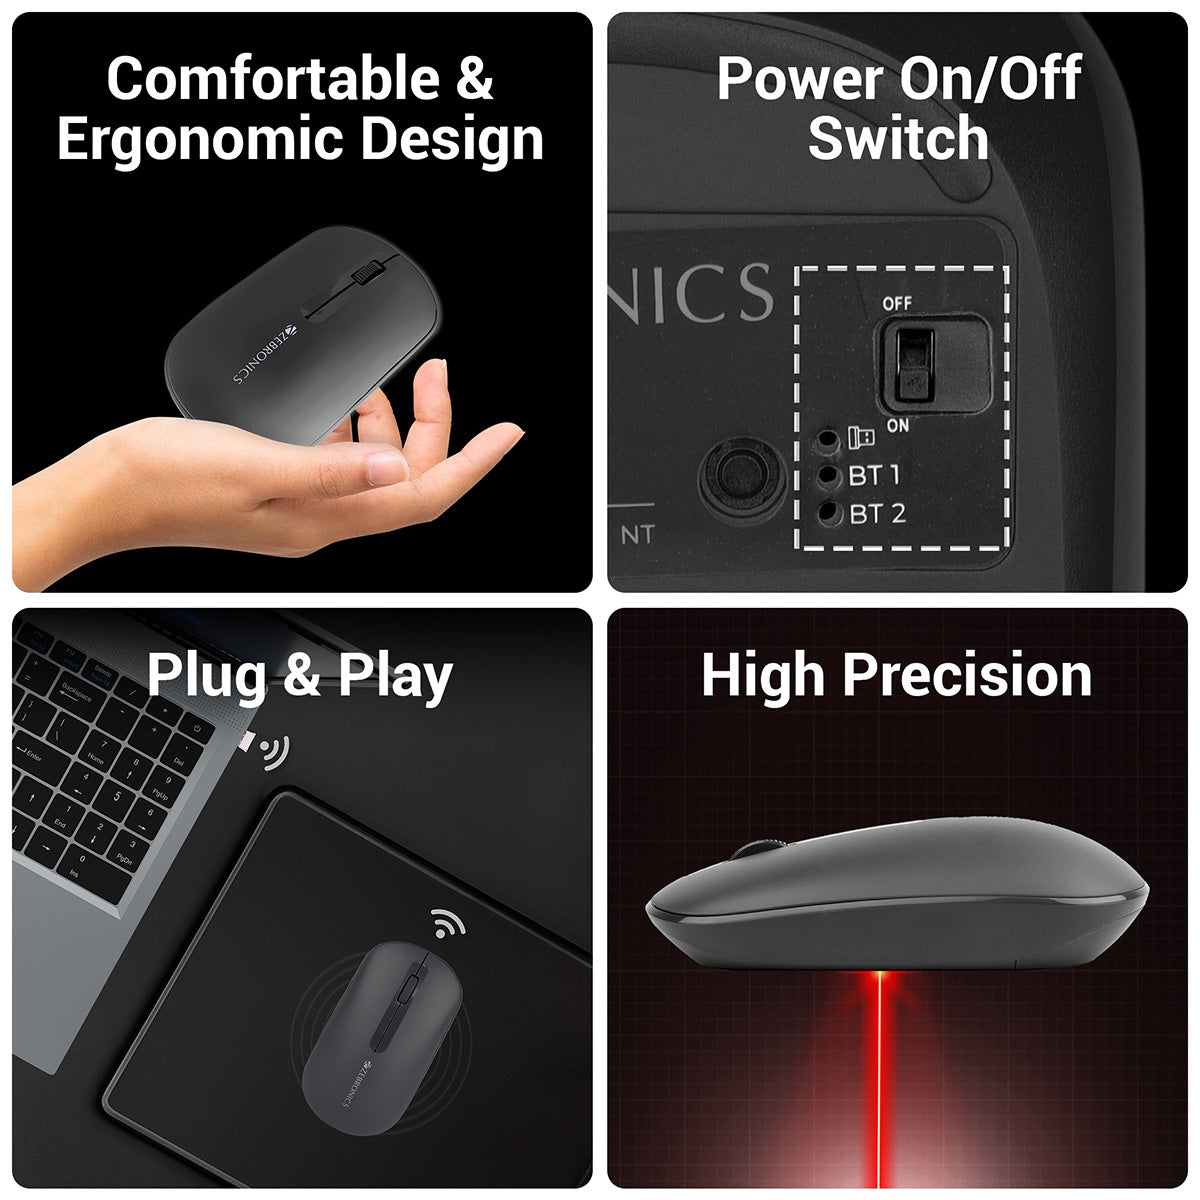 Zeb-Pulse - Wireless Mouse - Zebronics